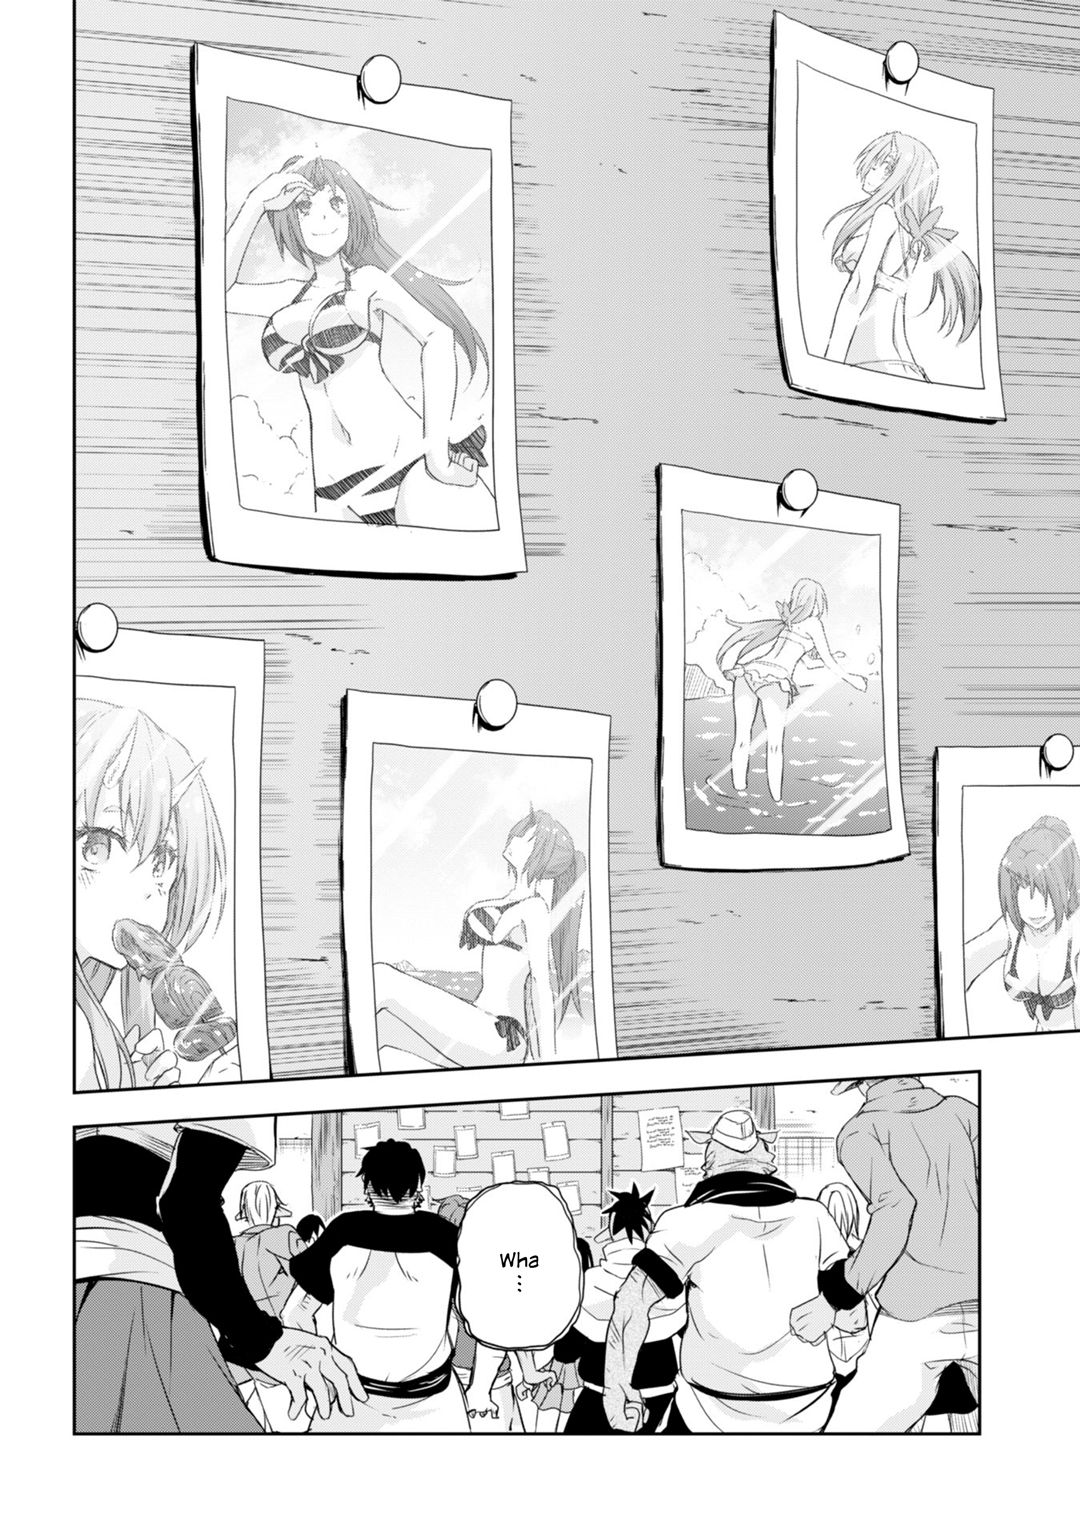 Tensei Shitara Slime Datta Ken: Mamono no Kuni no Arukikata Vol. 5 Ch. 27 A Secret Organization ☆ 3 Stars!!